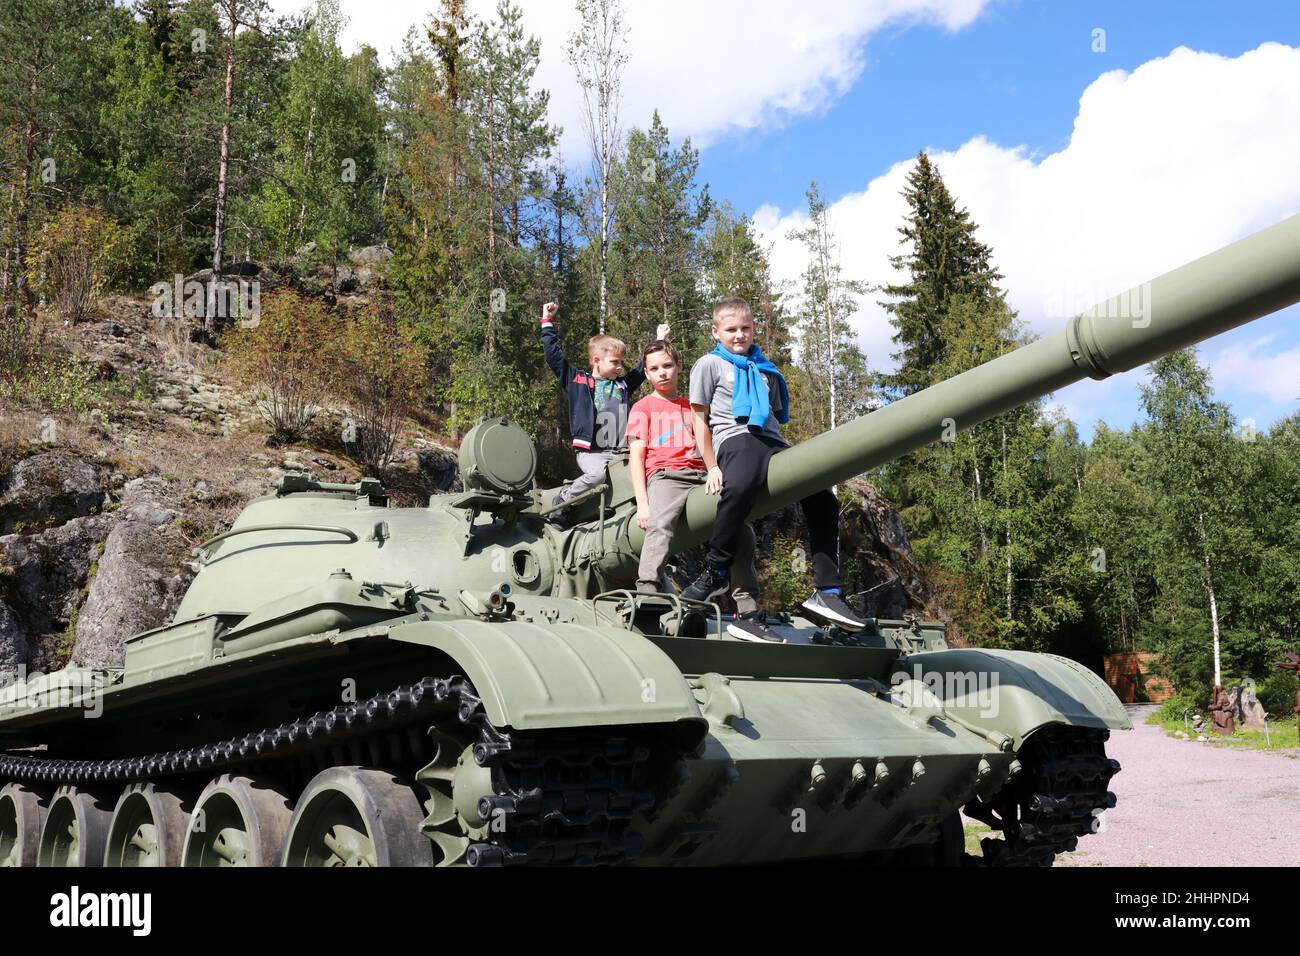 Children sitting on gun of t-62 tank at Gora Filina, Karelia Stock Photo